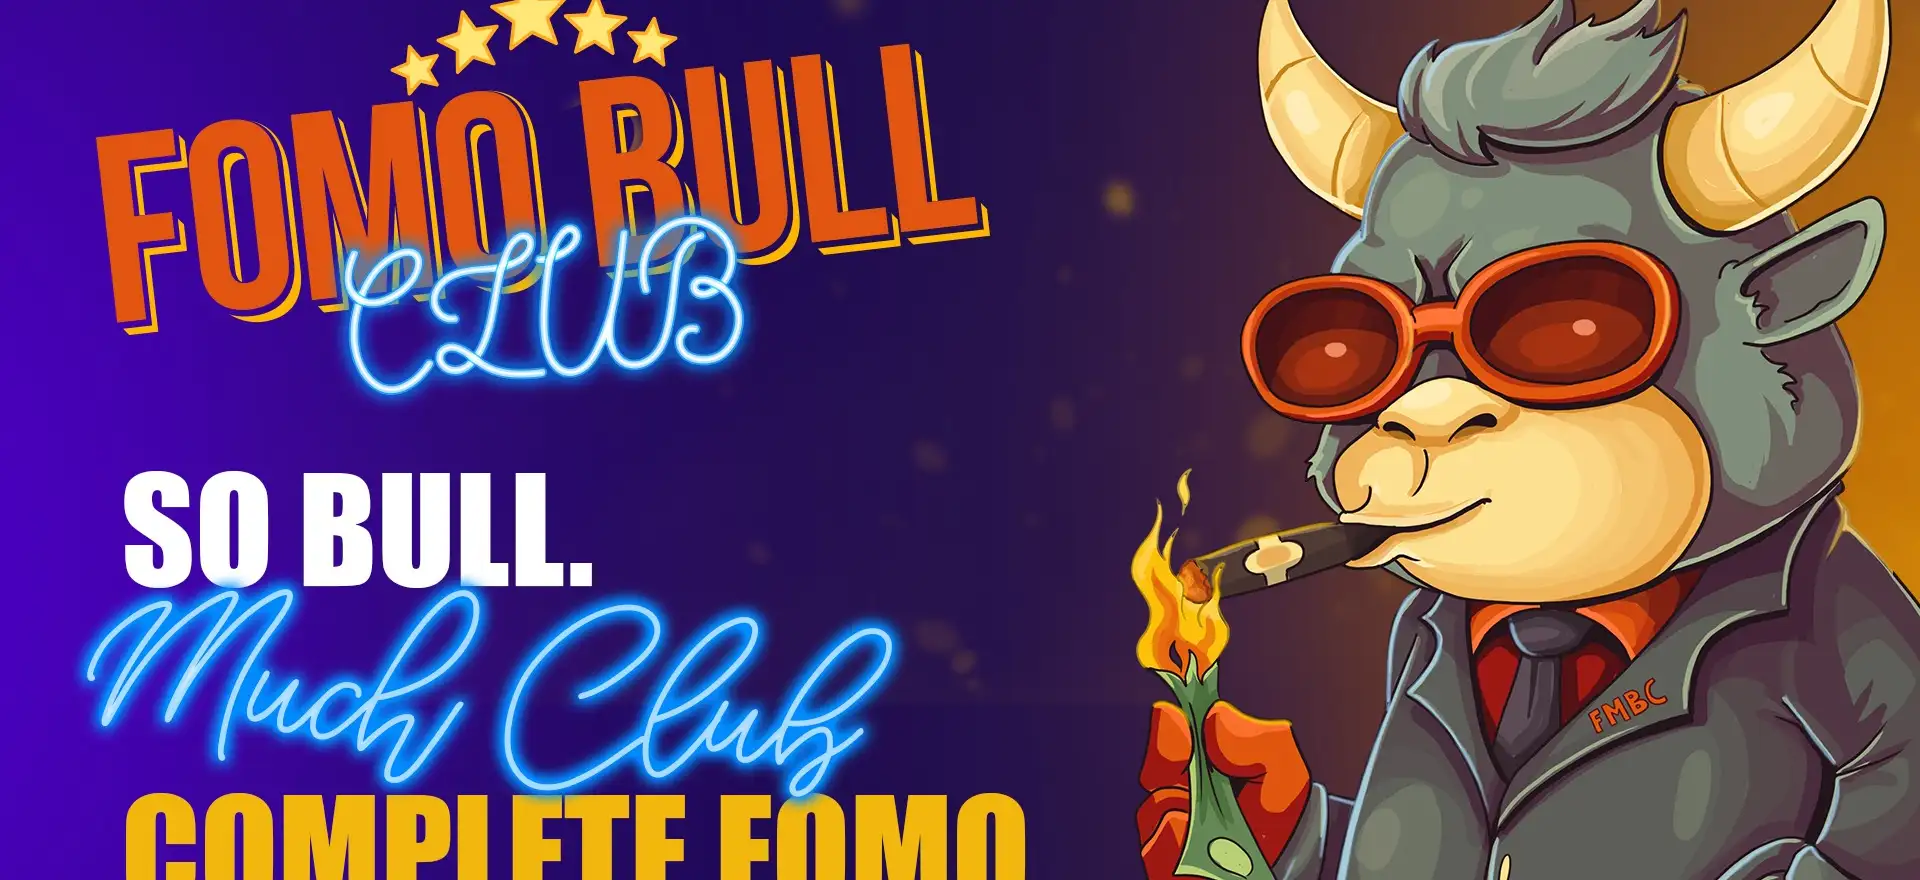 FOMO BULL CLUB